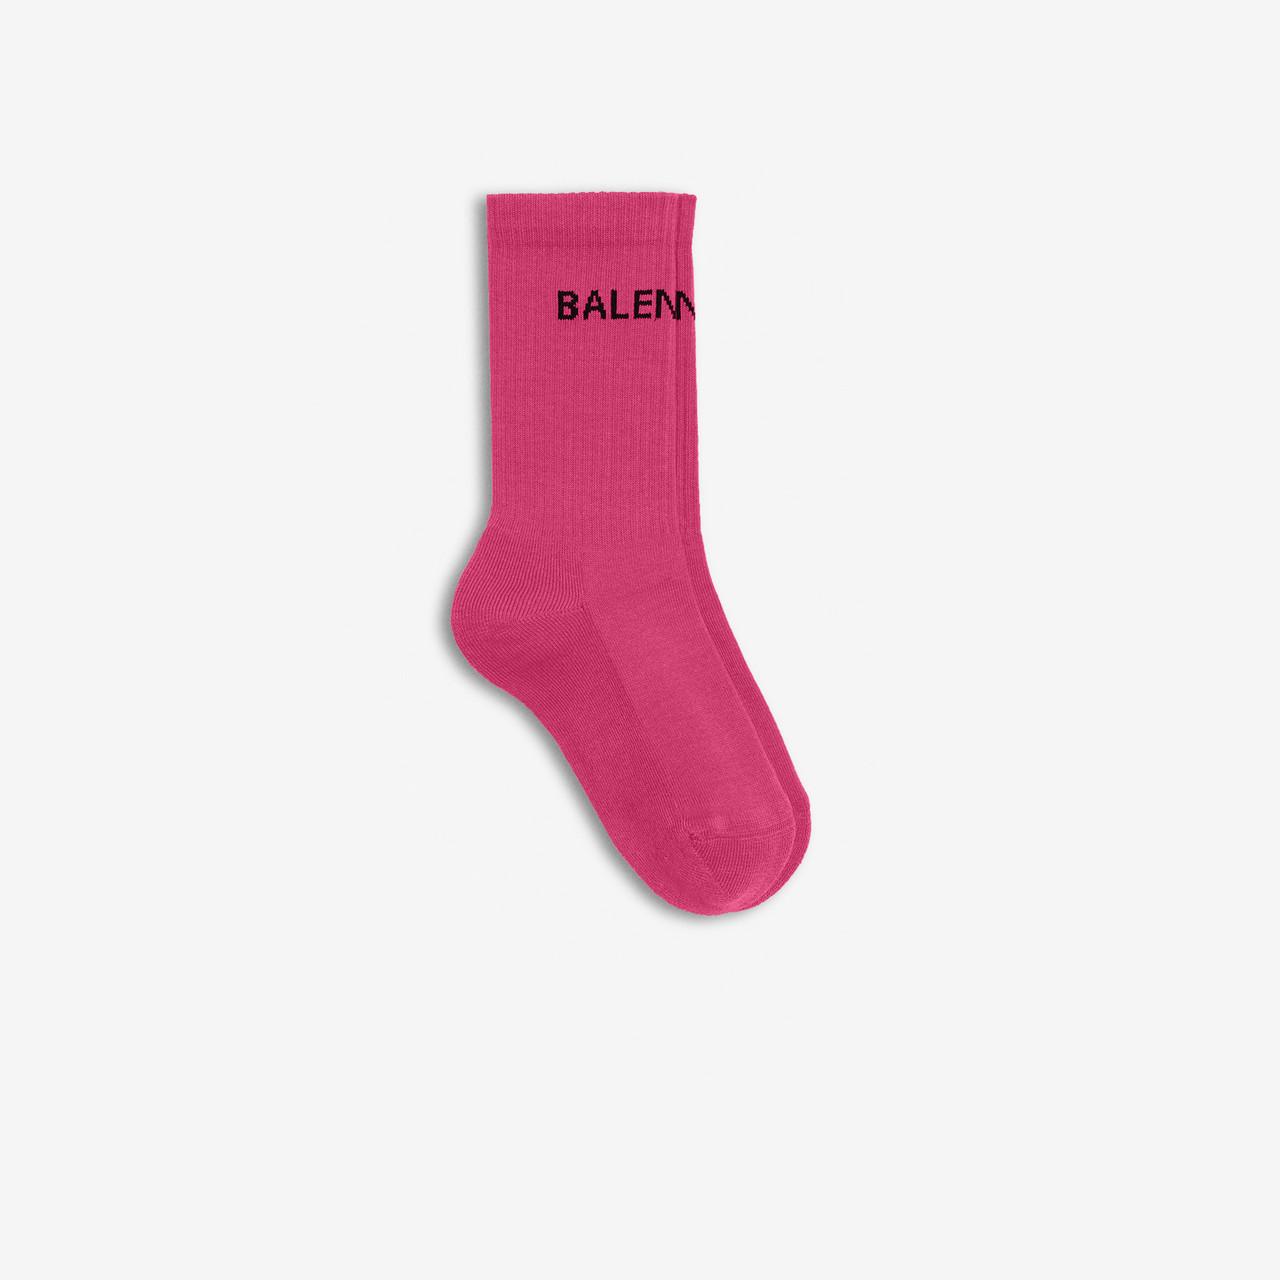 Balenciaga Cotton Socks in Fuchsia/Black (Pink) | Lyst